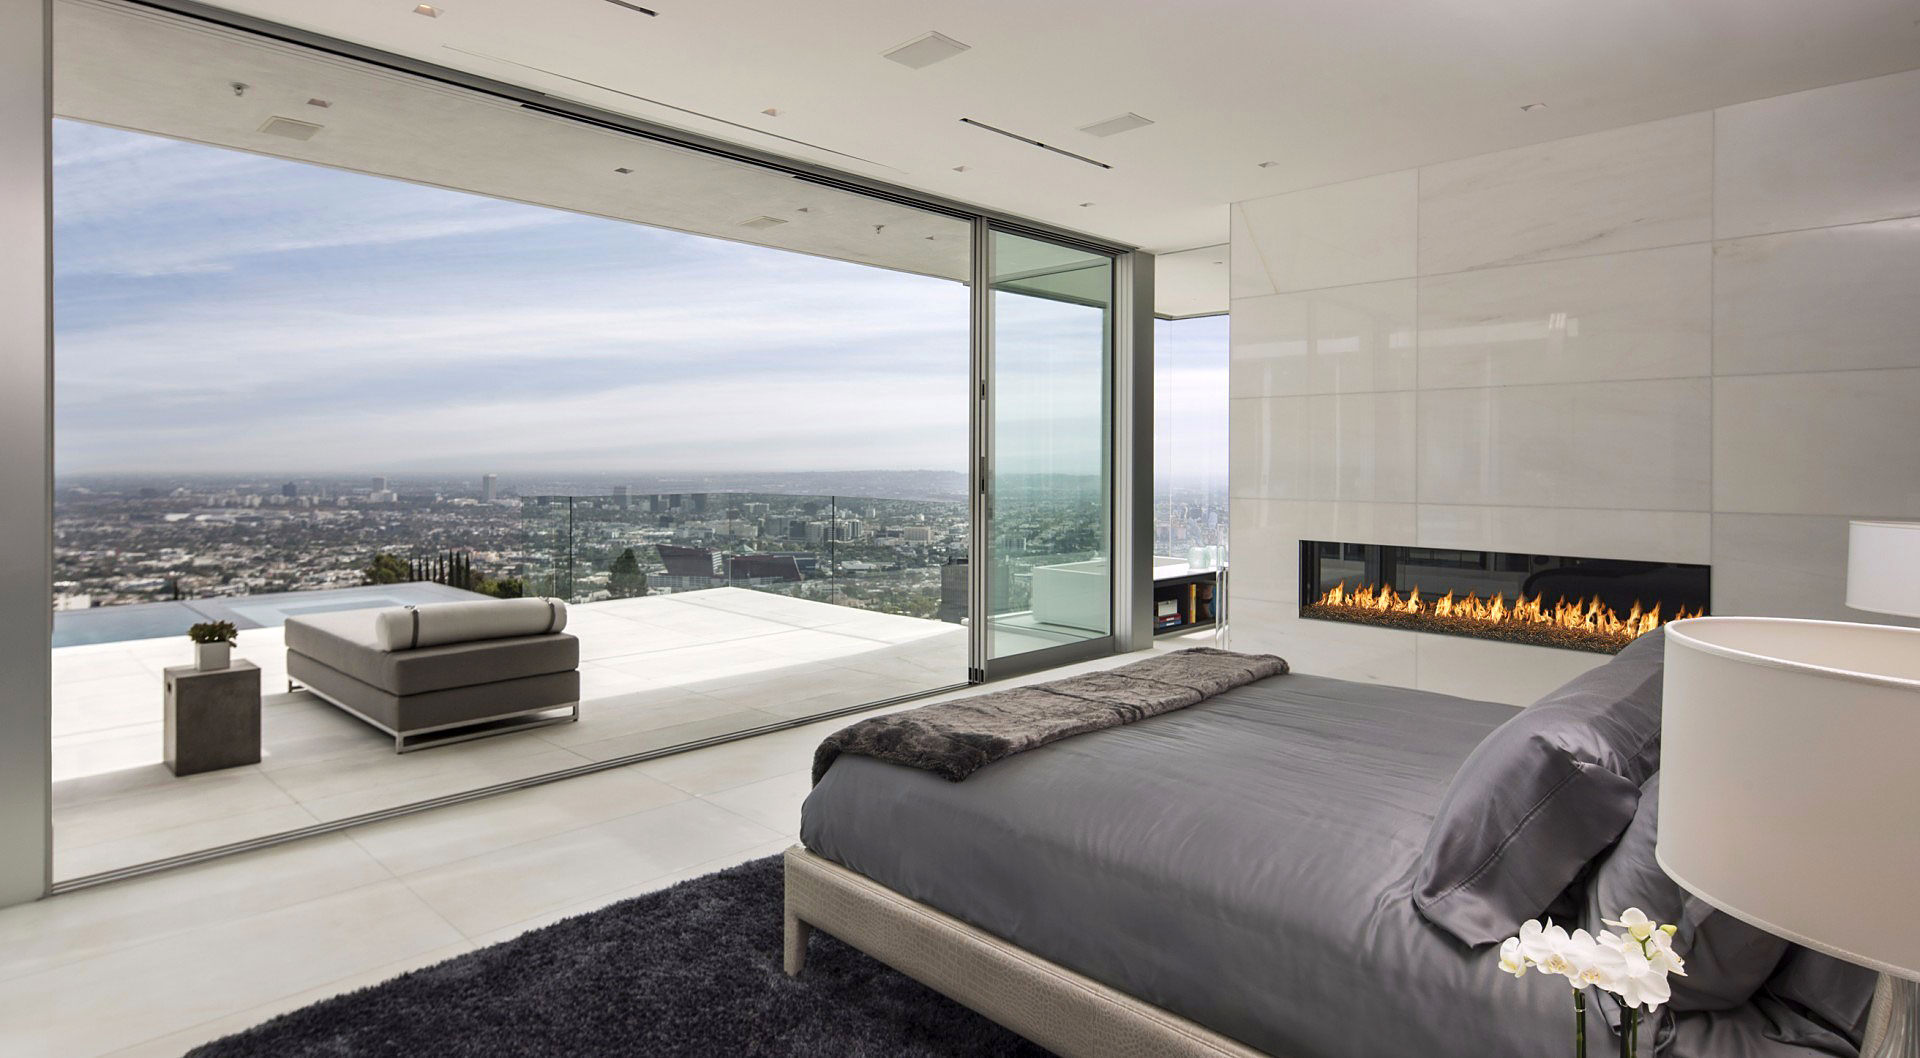 Bedroom With Floor-to-Ceiling Windows